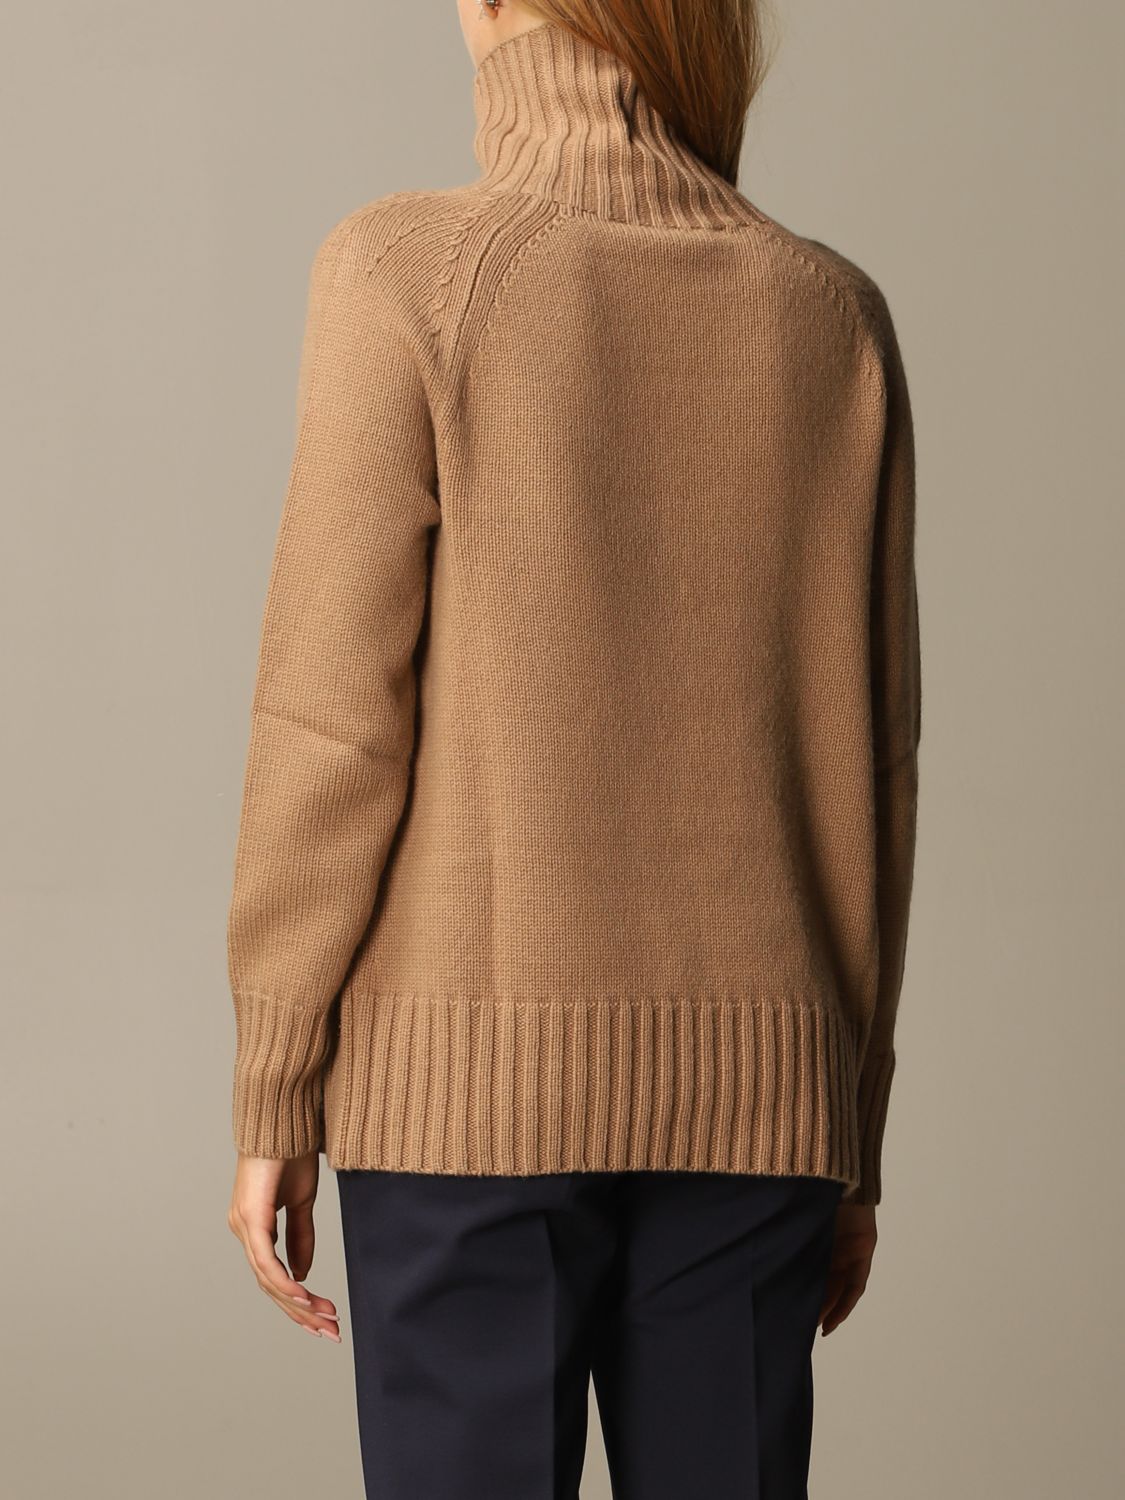 S MAX MARA: Mantova pullover in wool and cashmere | Sweater S Max Mara